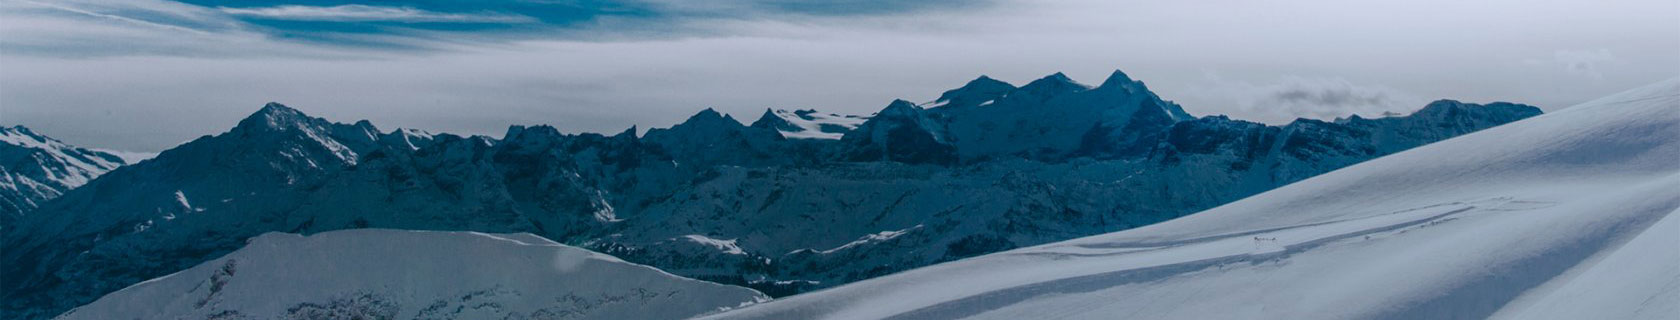 SNOWRIDER дает старт кампании «Предзаказ 2020»